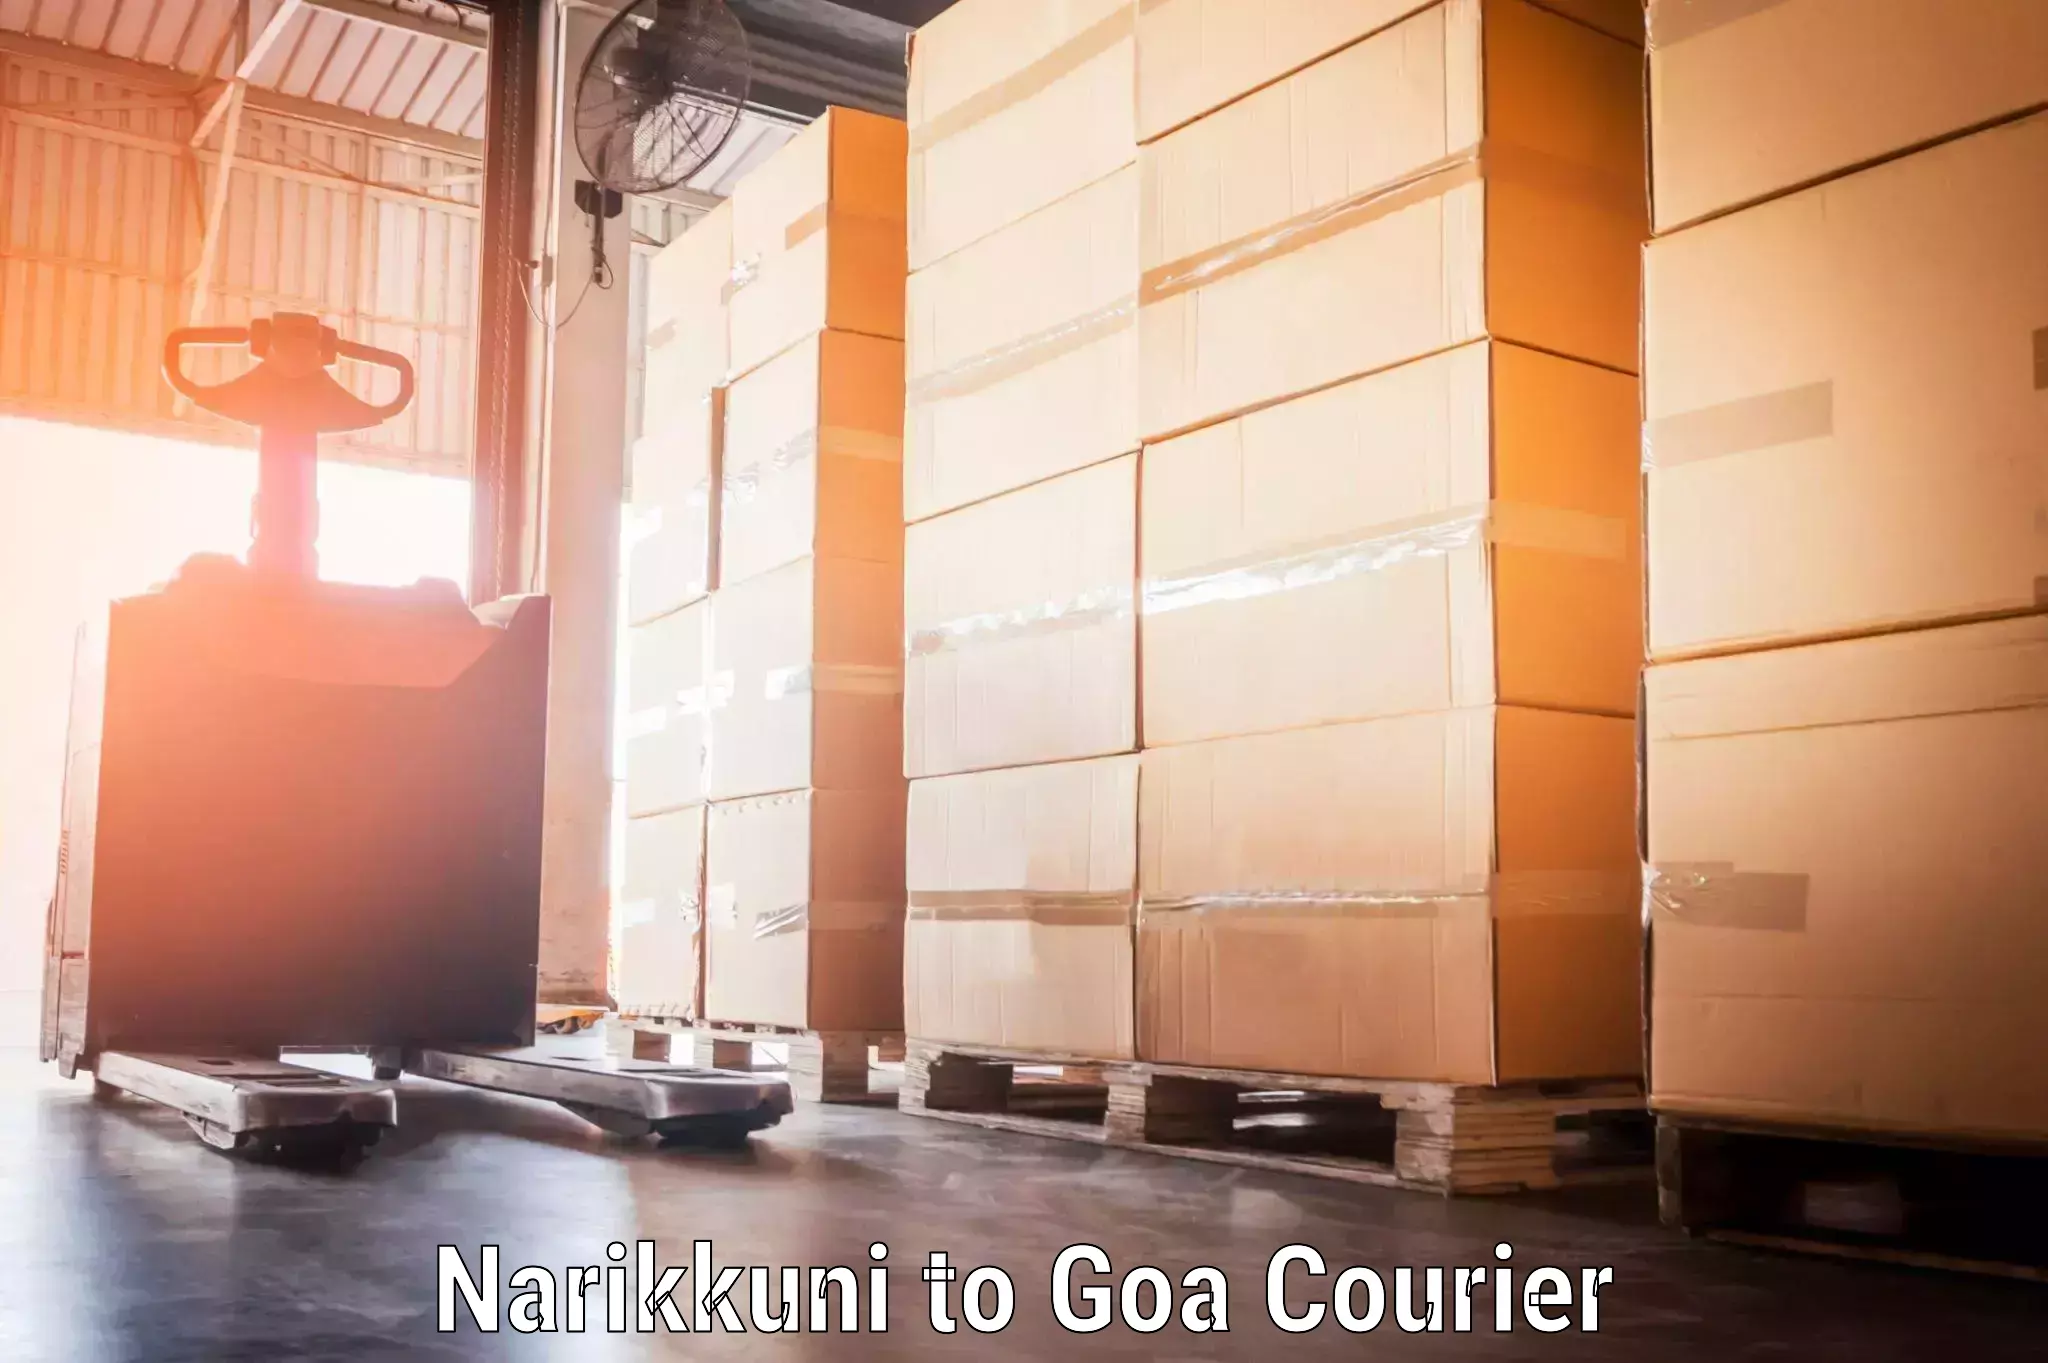 Baggage transport professionals Narikkuni to Goa